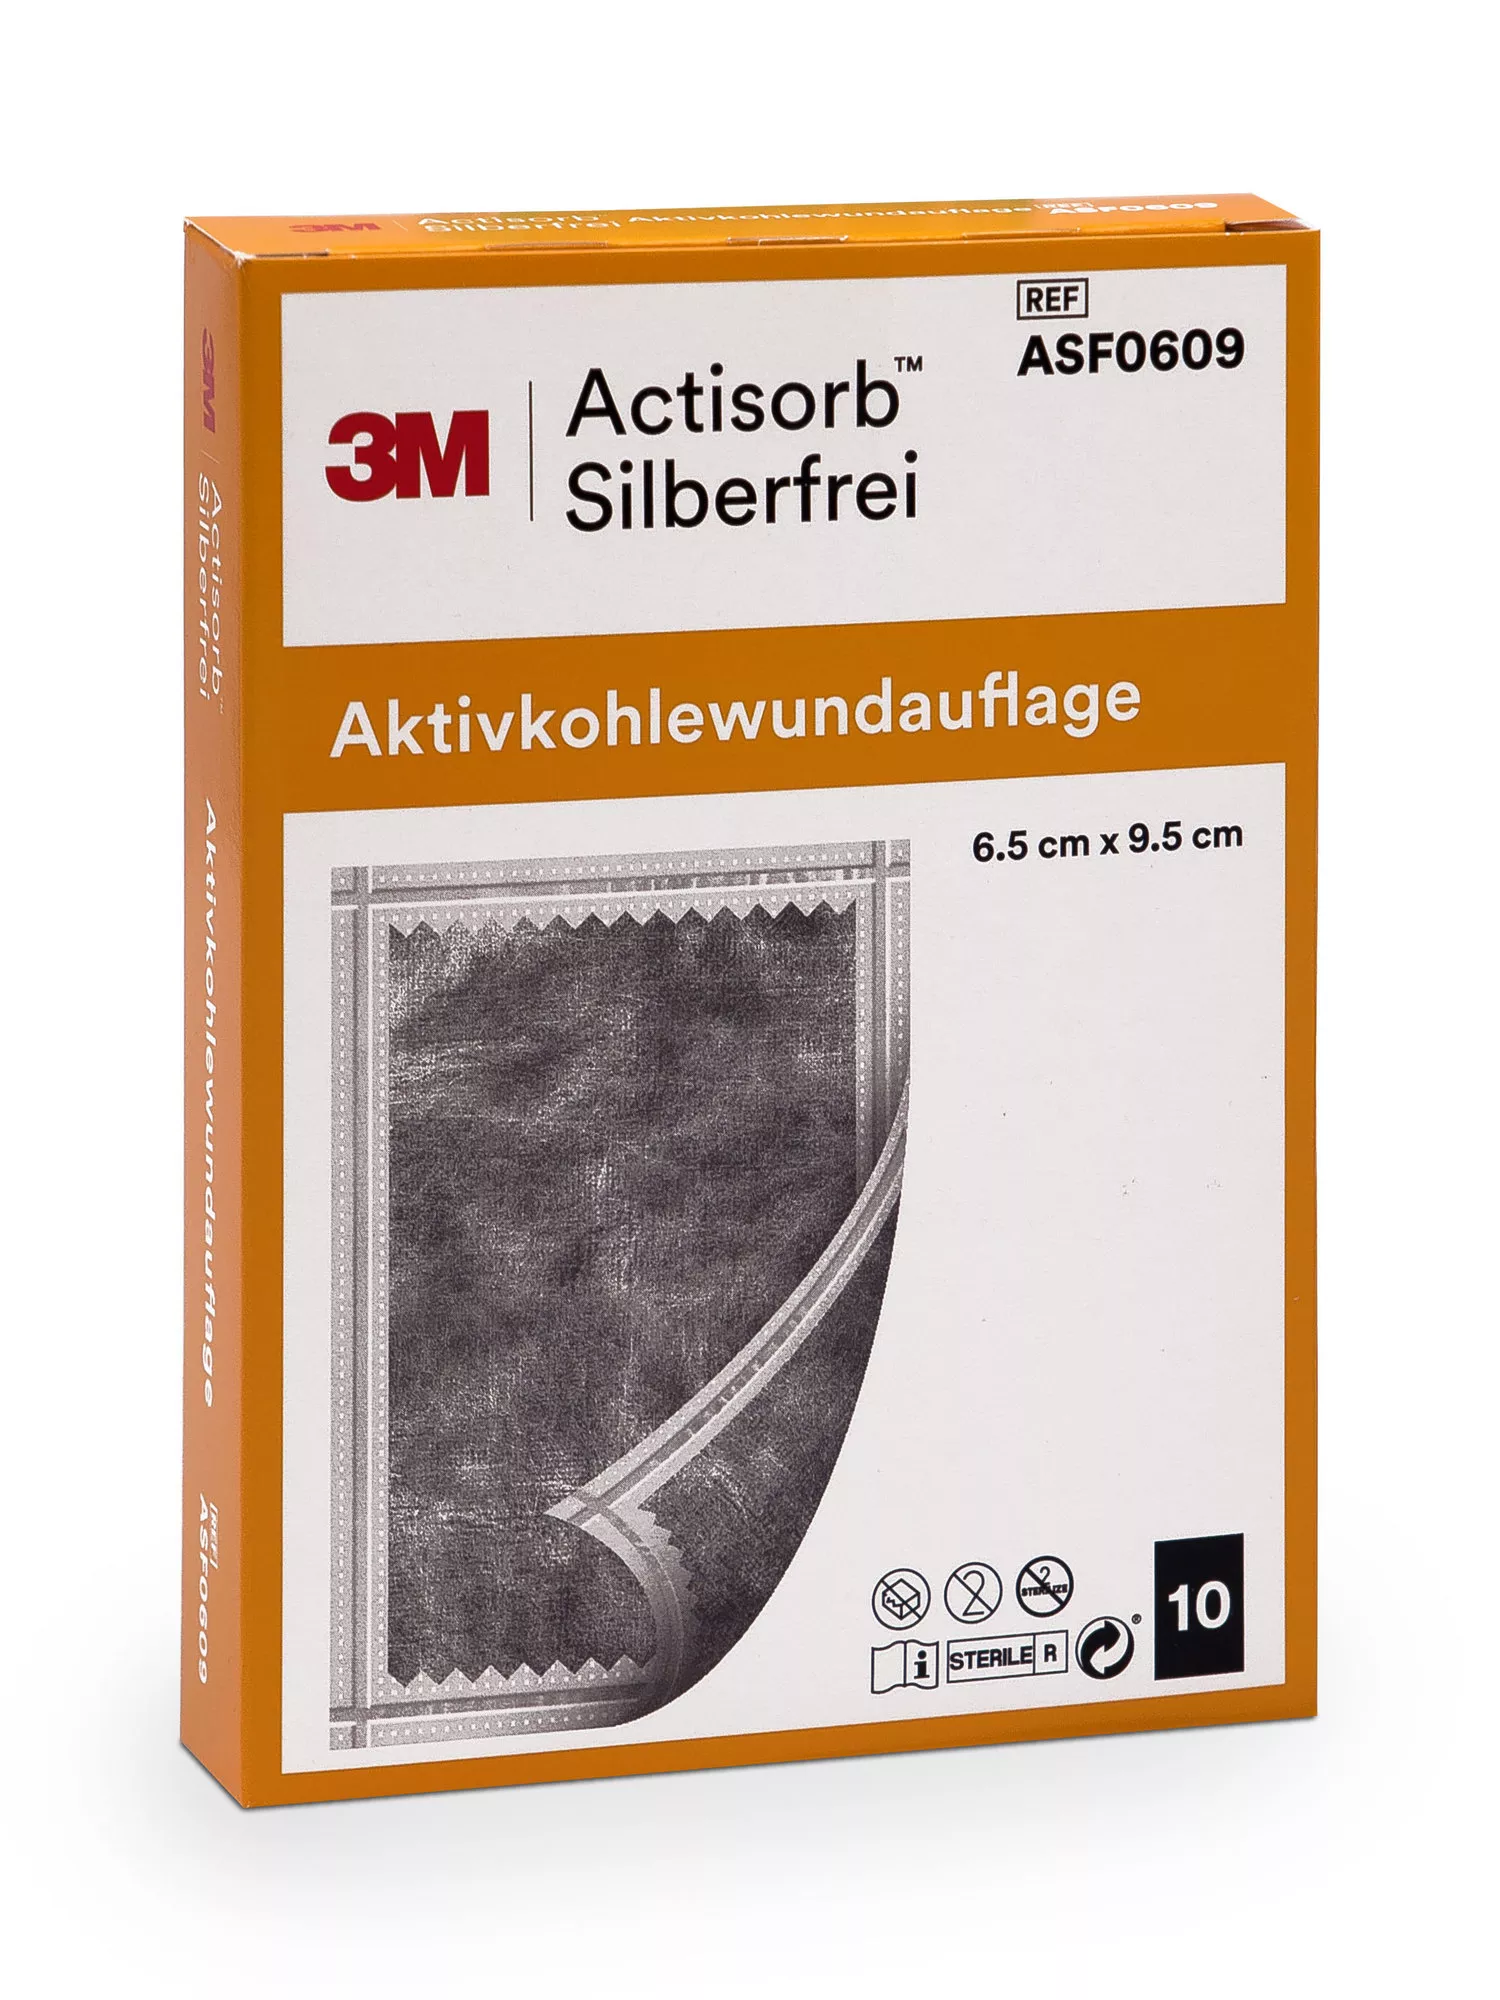 ACTISORB SILBERFREI 6.5x9.5 cm Aktivkohle, 10 Stück